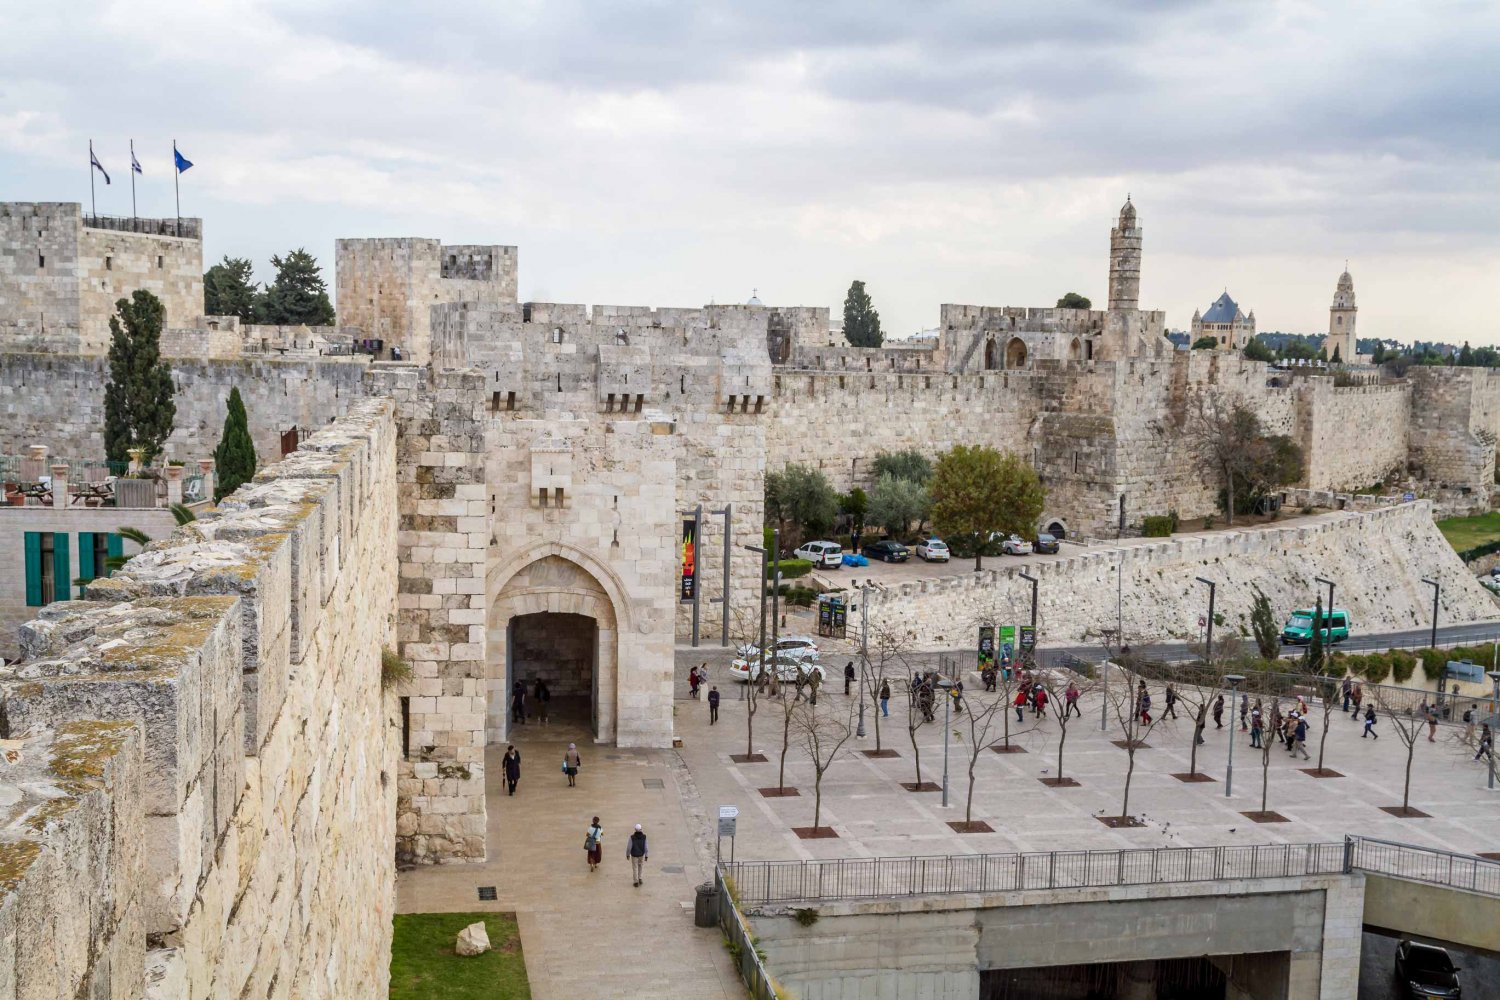 Jaffa Gate or Bab al-Khalil, one of the gates to Jerusalem's Old City